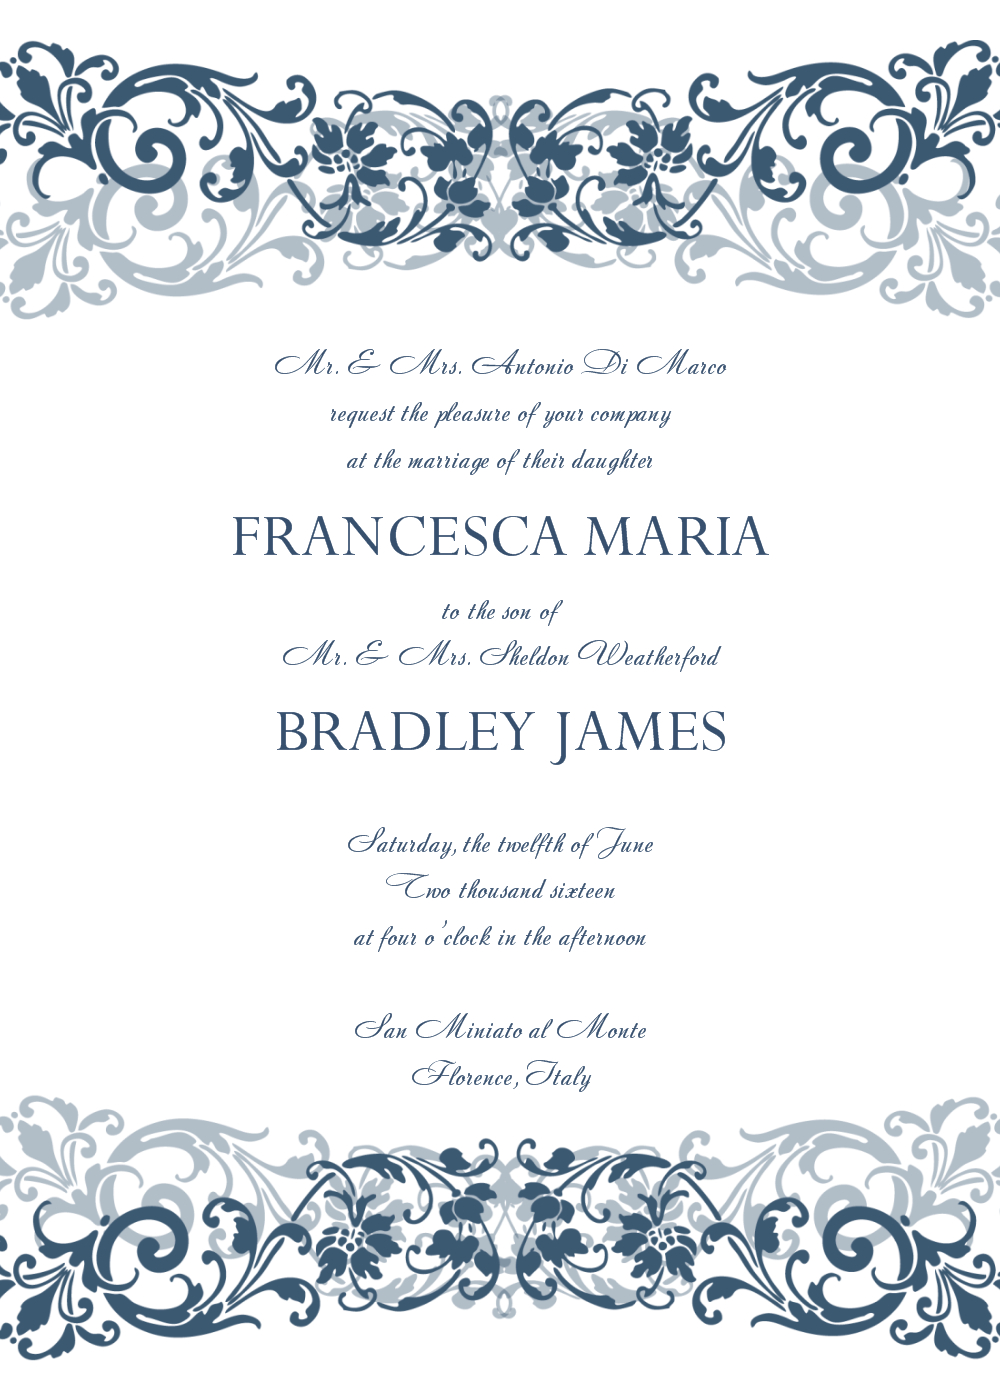 Wedding Invitation Templates | Invitation | Pinterest | Free Wedding - Free Printable Wedding Invitations With Photo